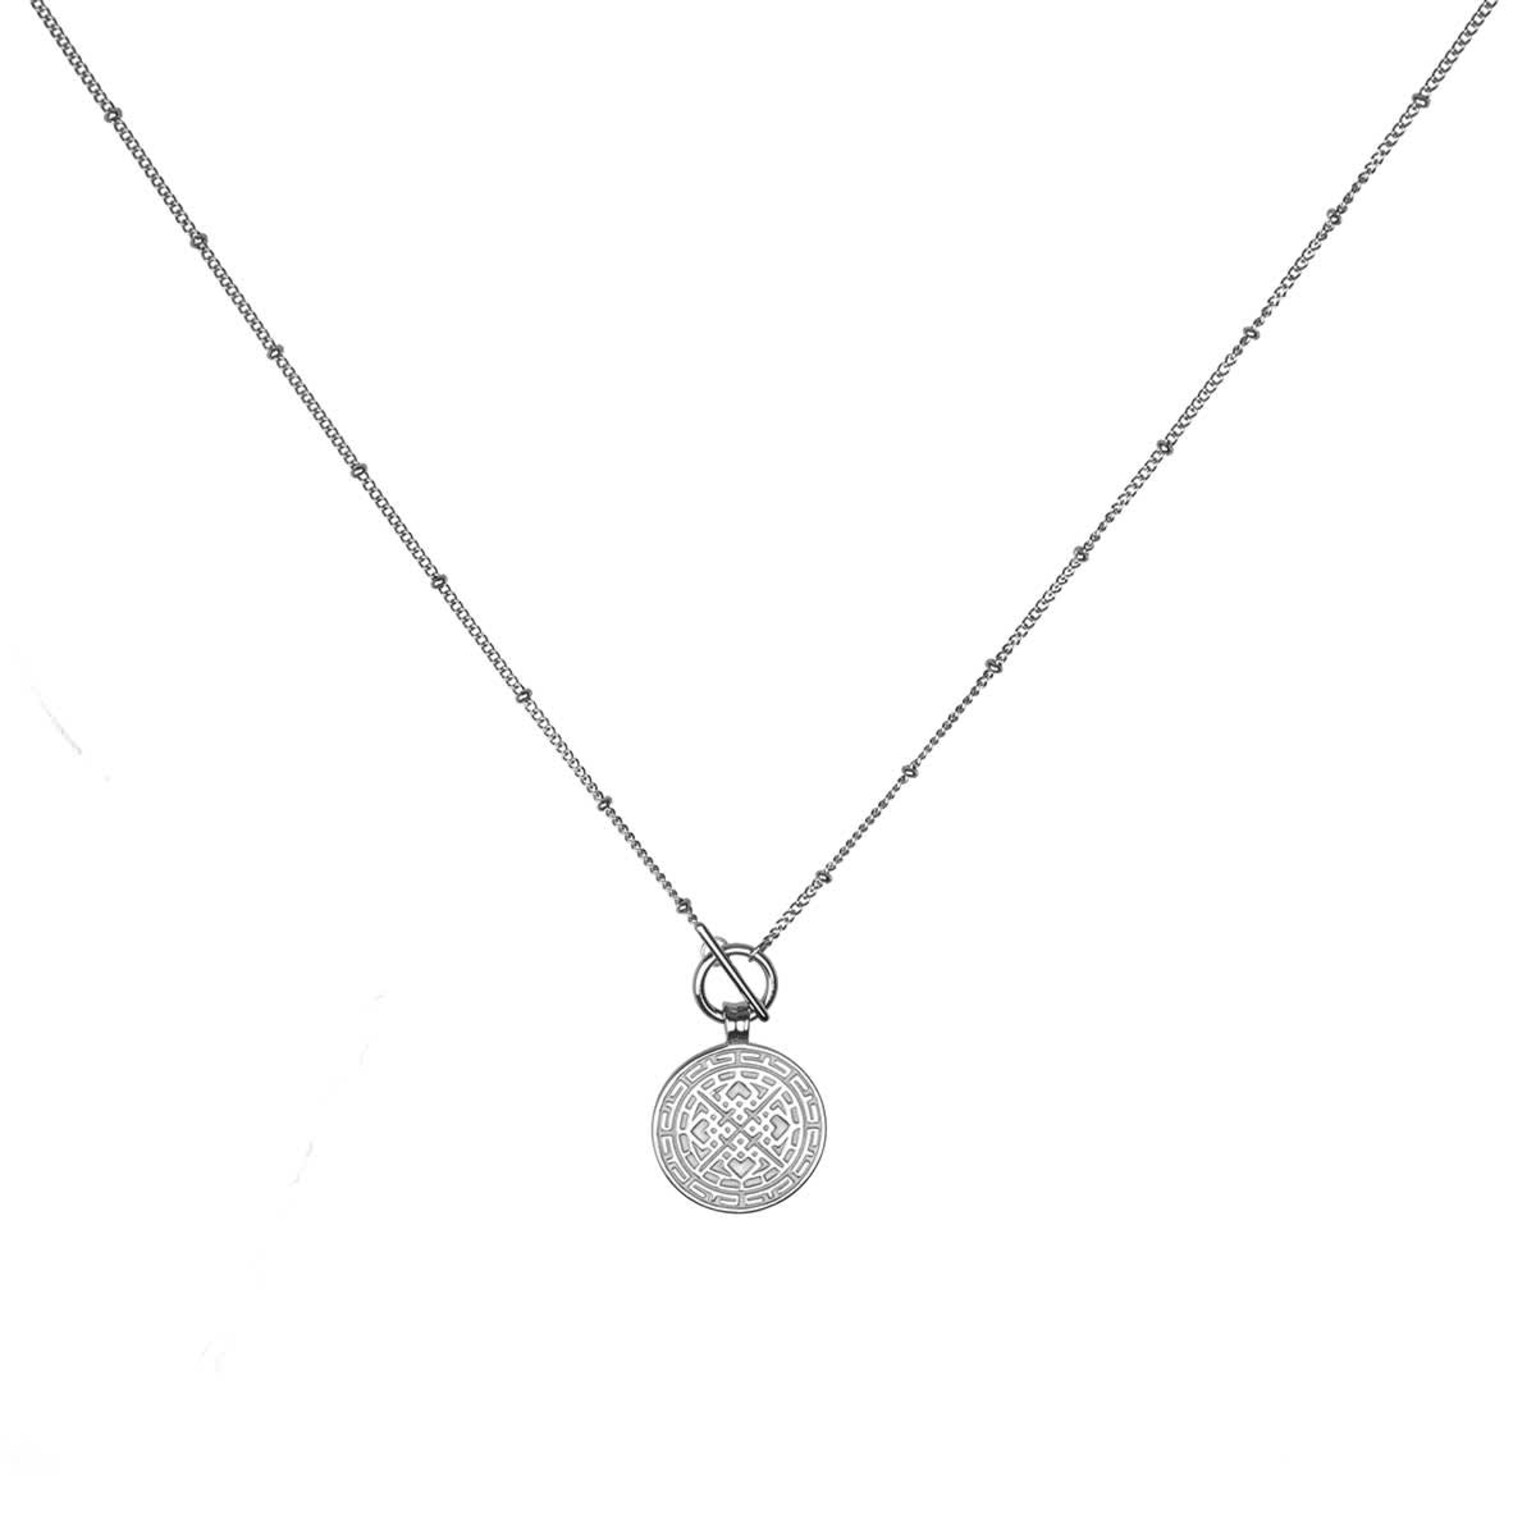 Necklace Charming Marrakech Silver